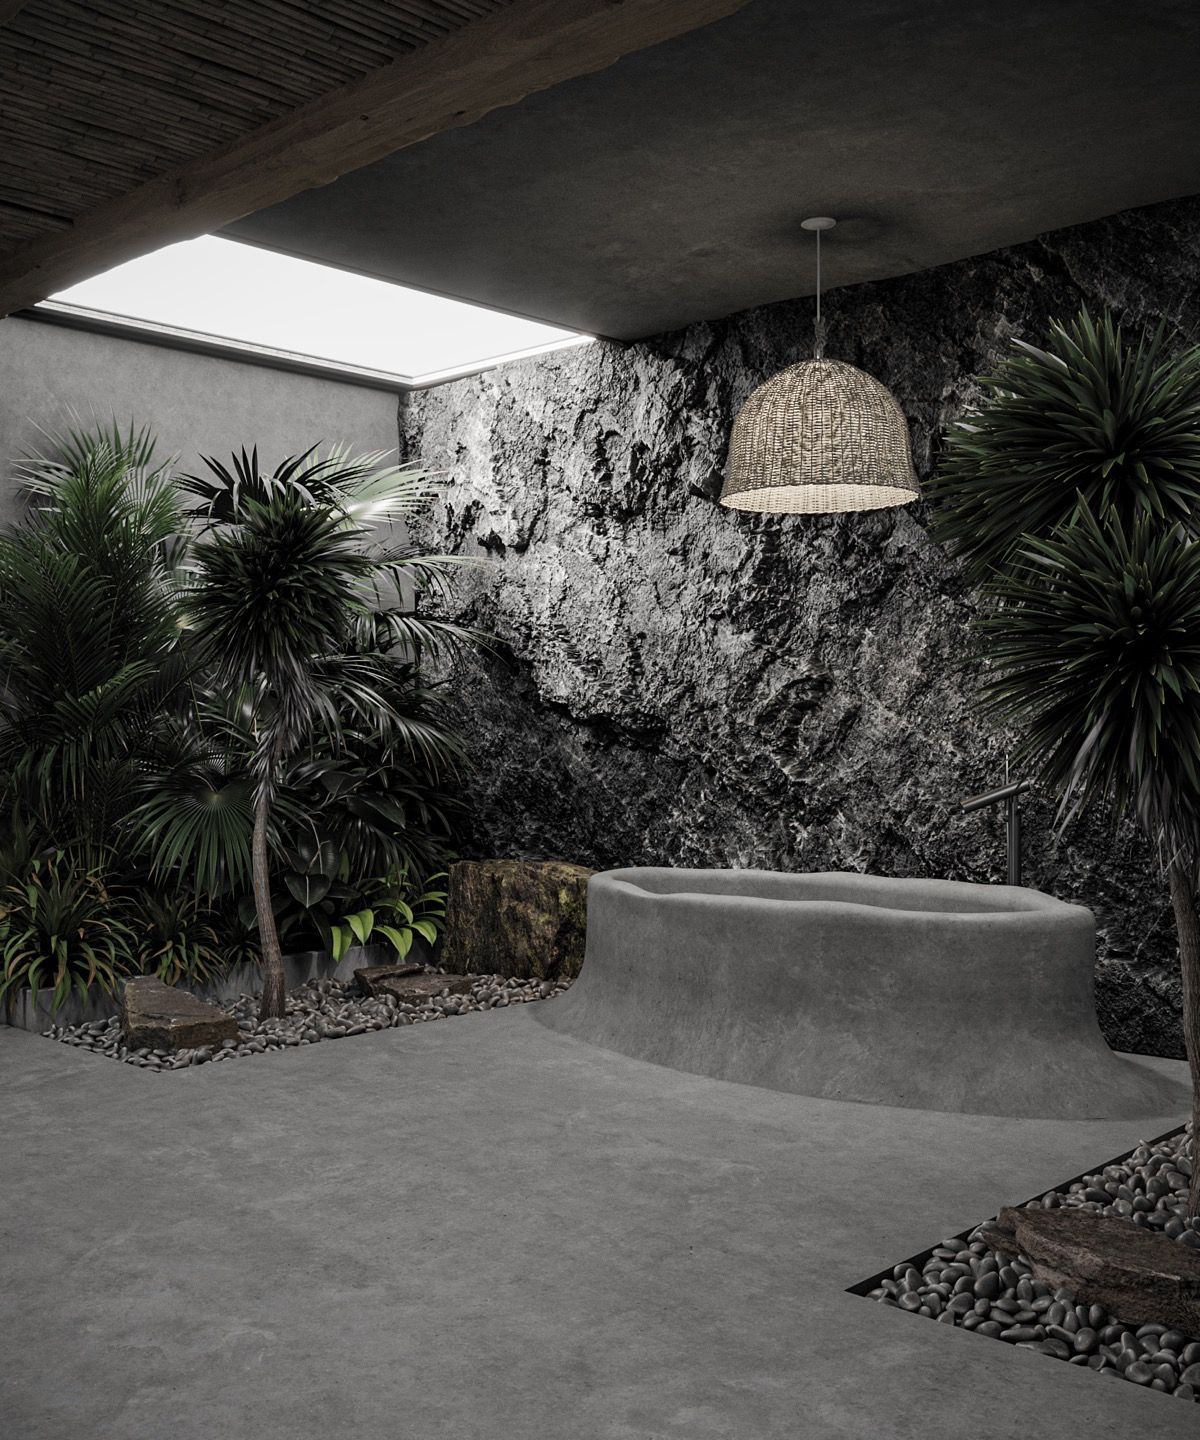 Desain kamar mandi estetis/home designing